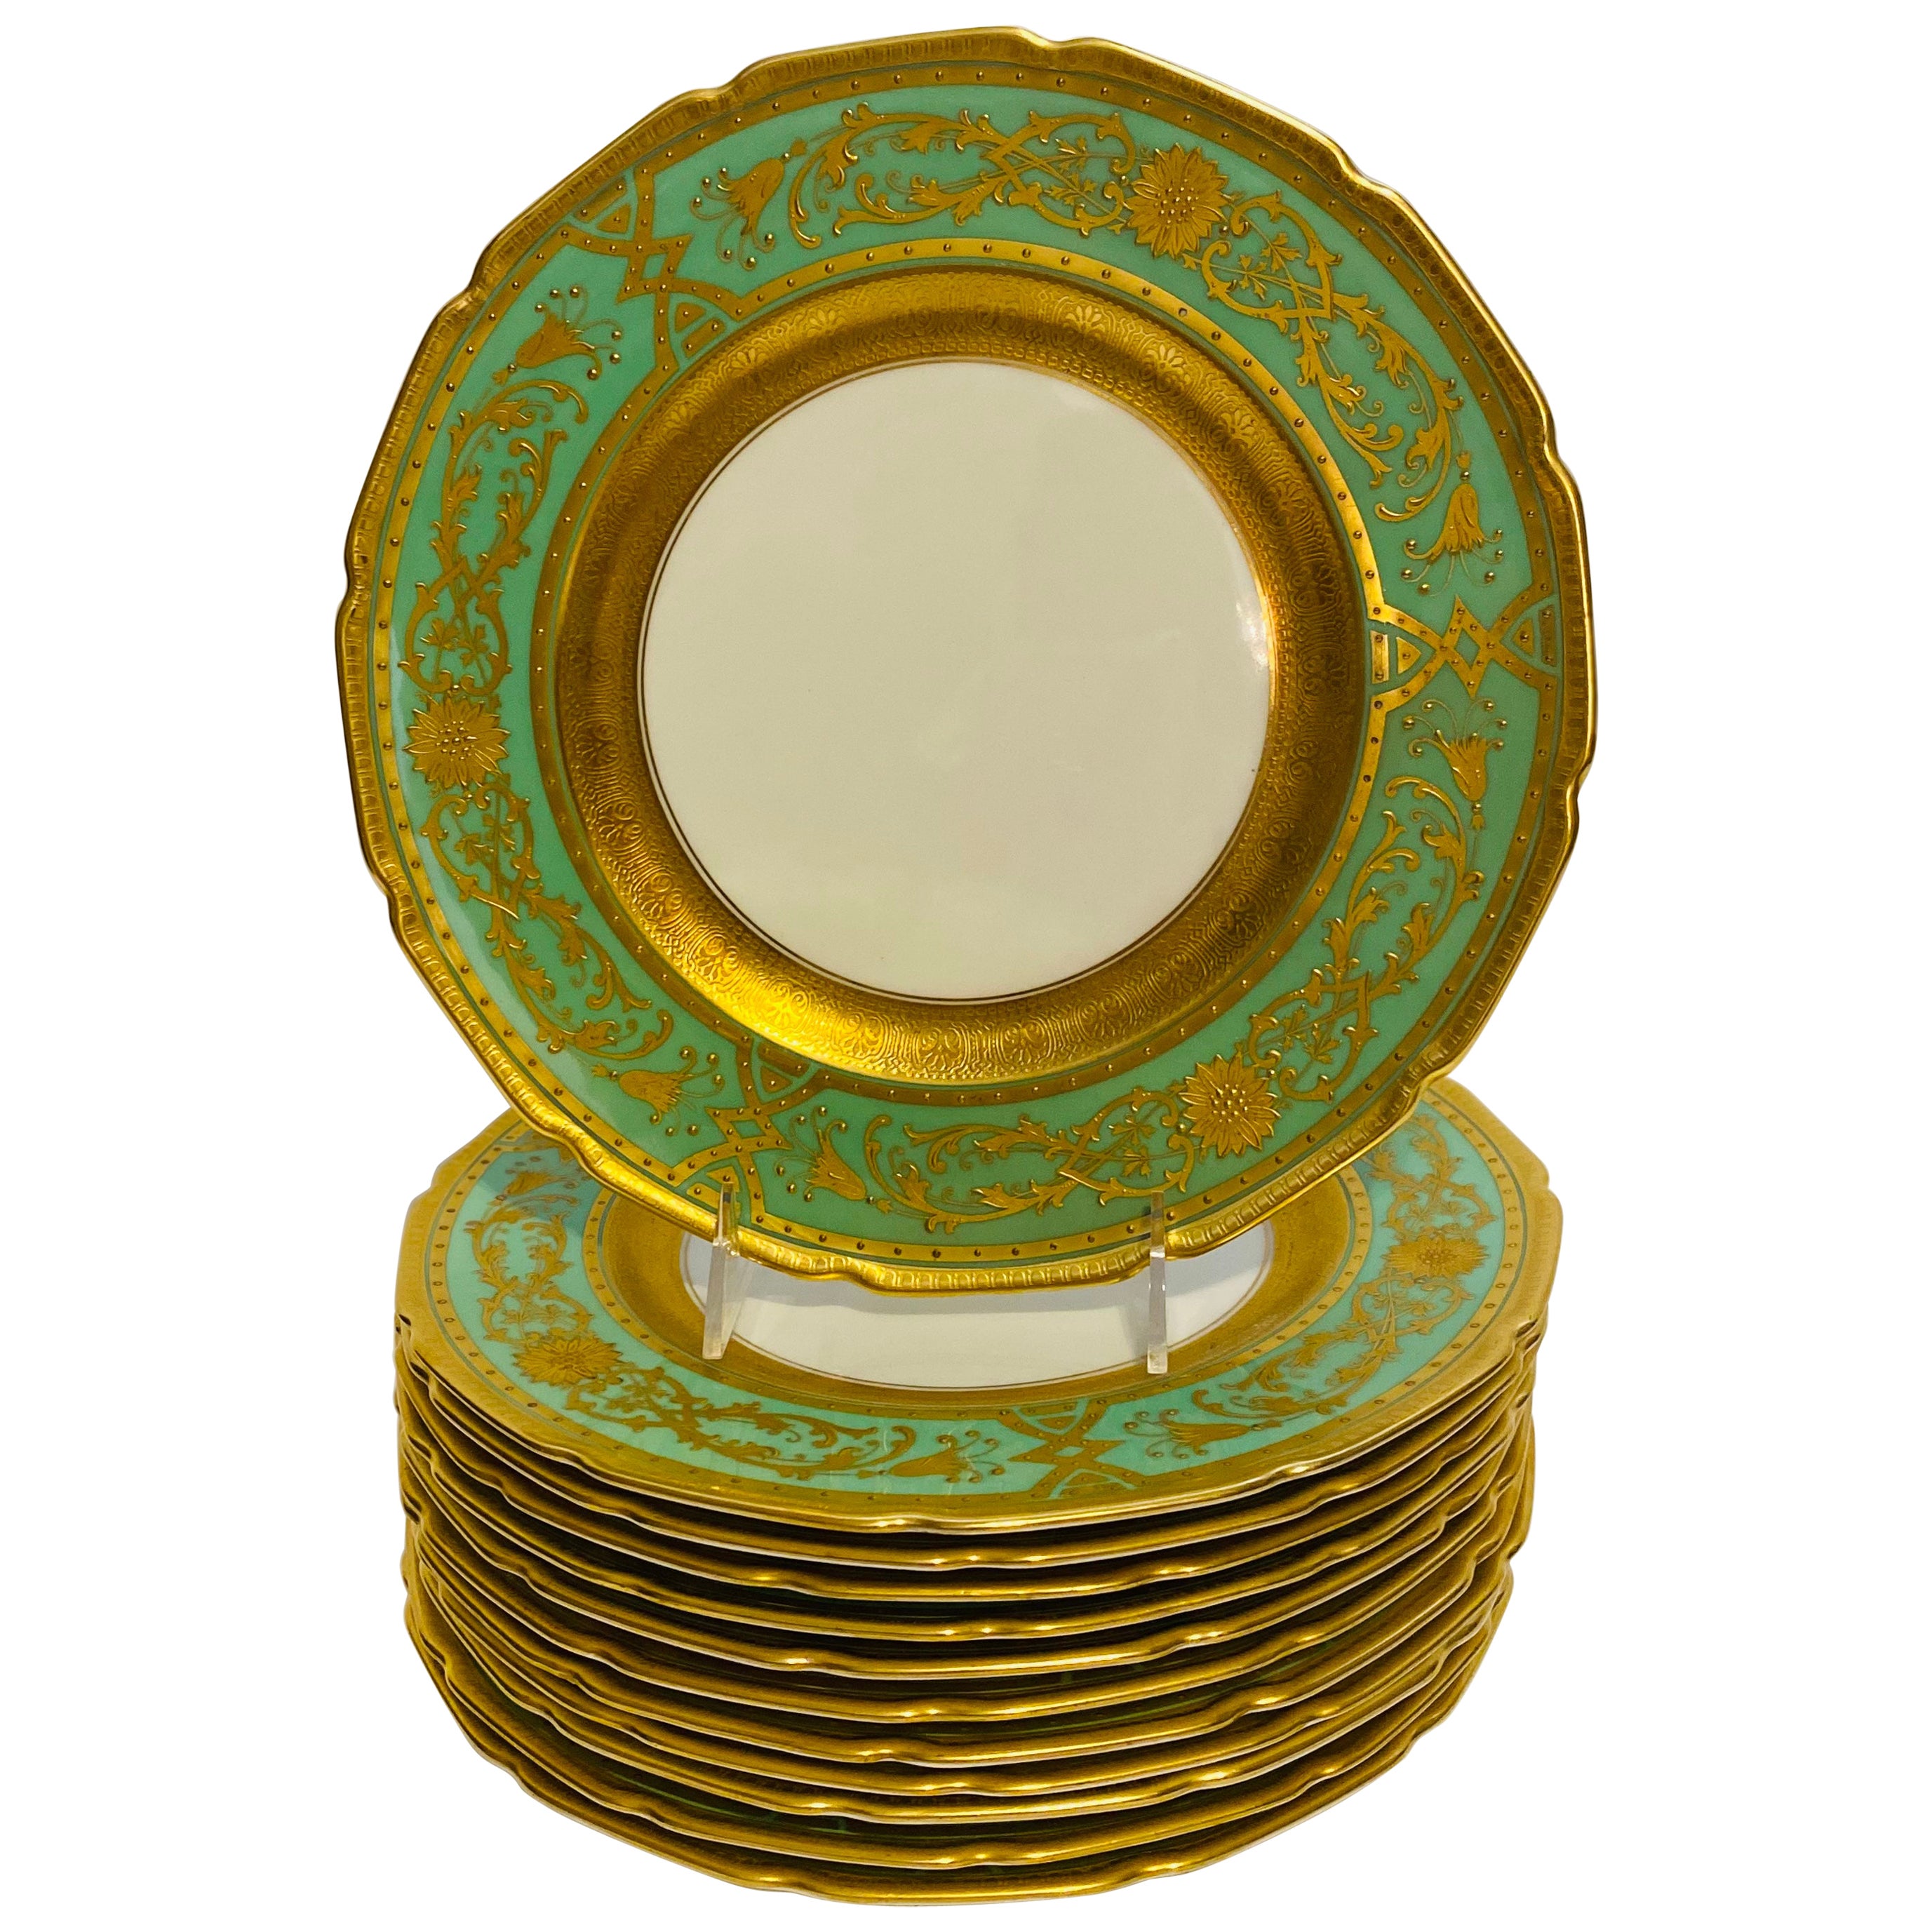 Twelve Heavy Gold & Green Dinner Plates, Antique English Circa 1910